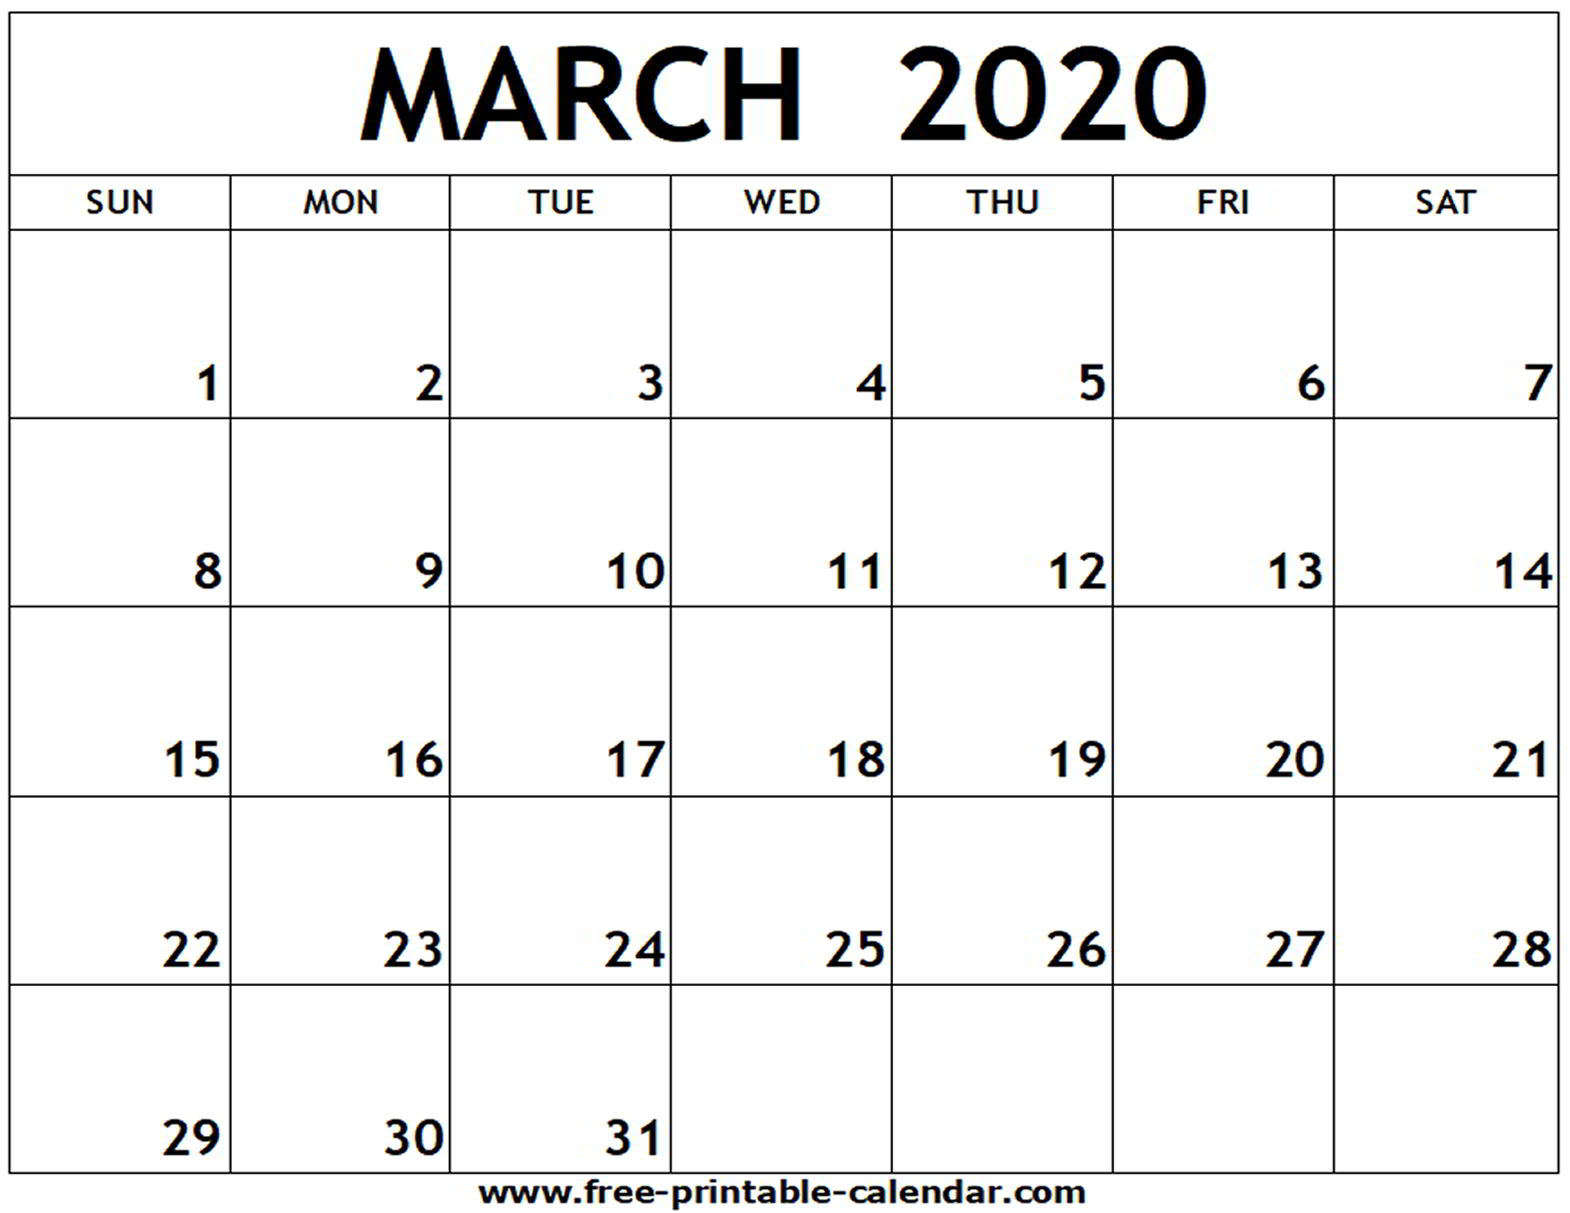 March 2020 Printable Calendar - Free-Printable-Calendar